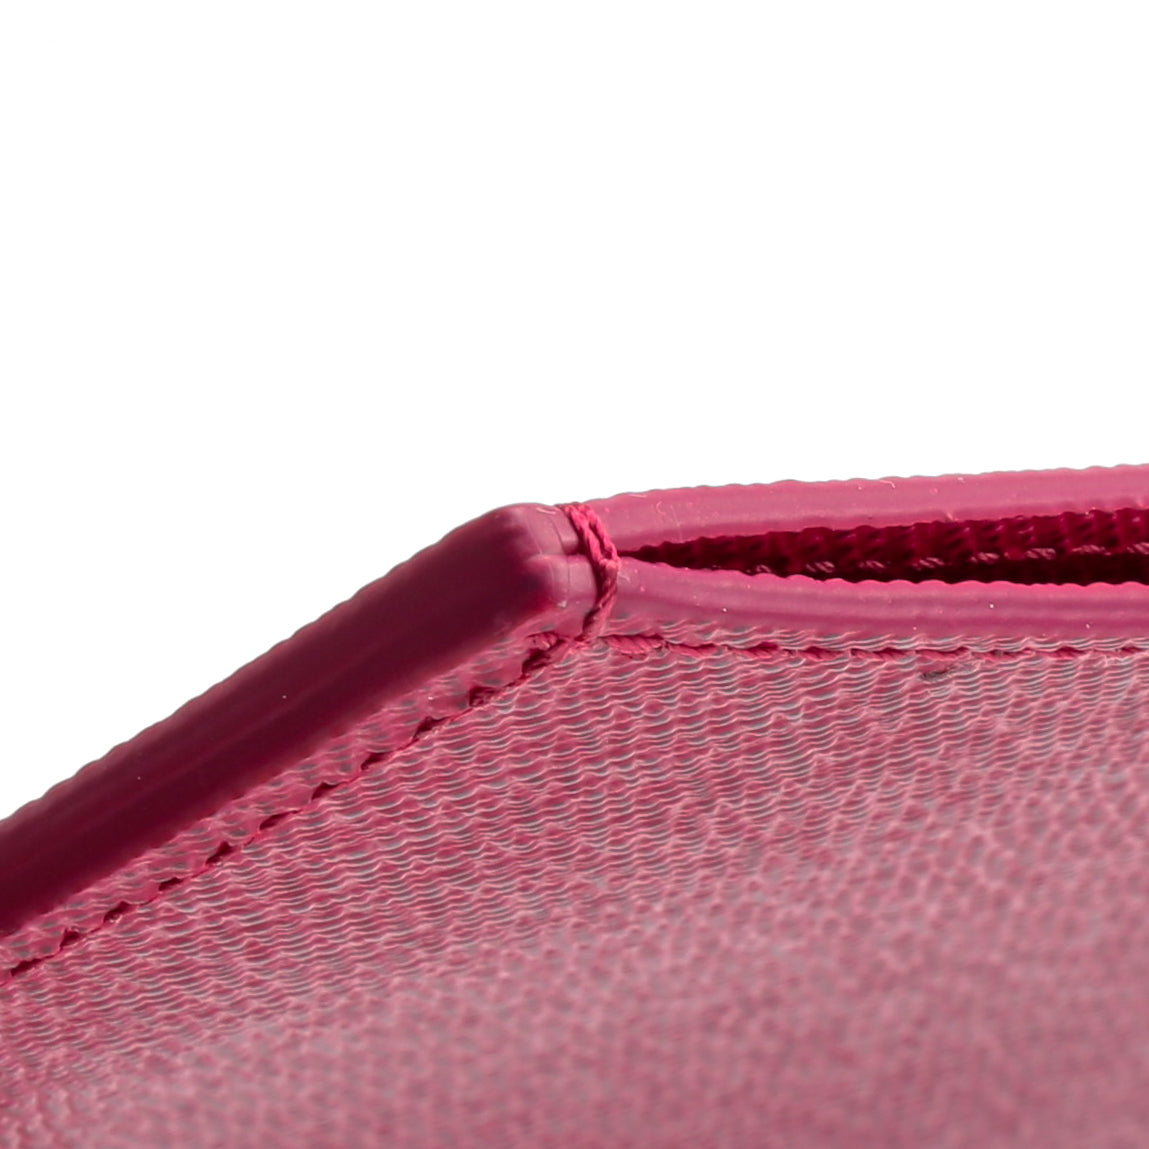 Louis Vuitton Felicie Zip Pouch Insert Case